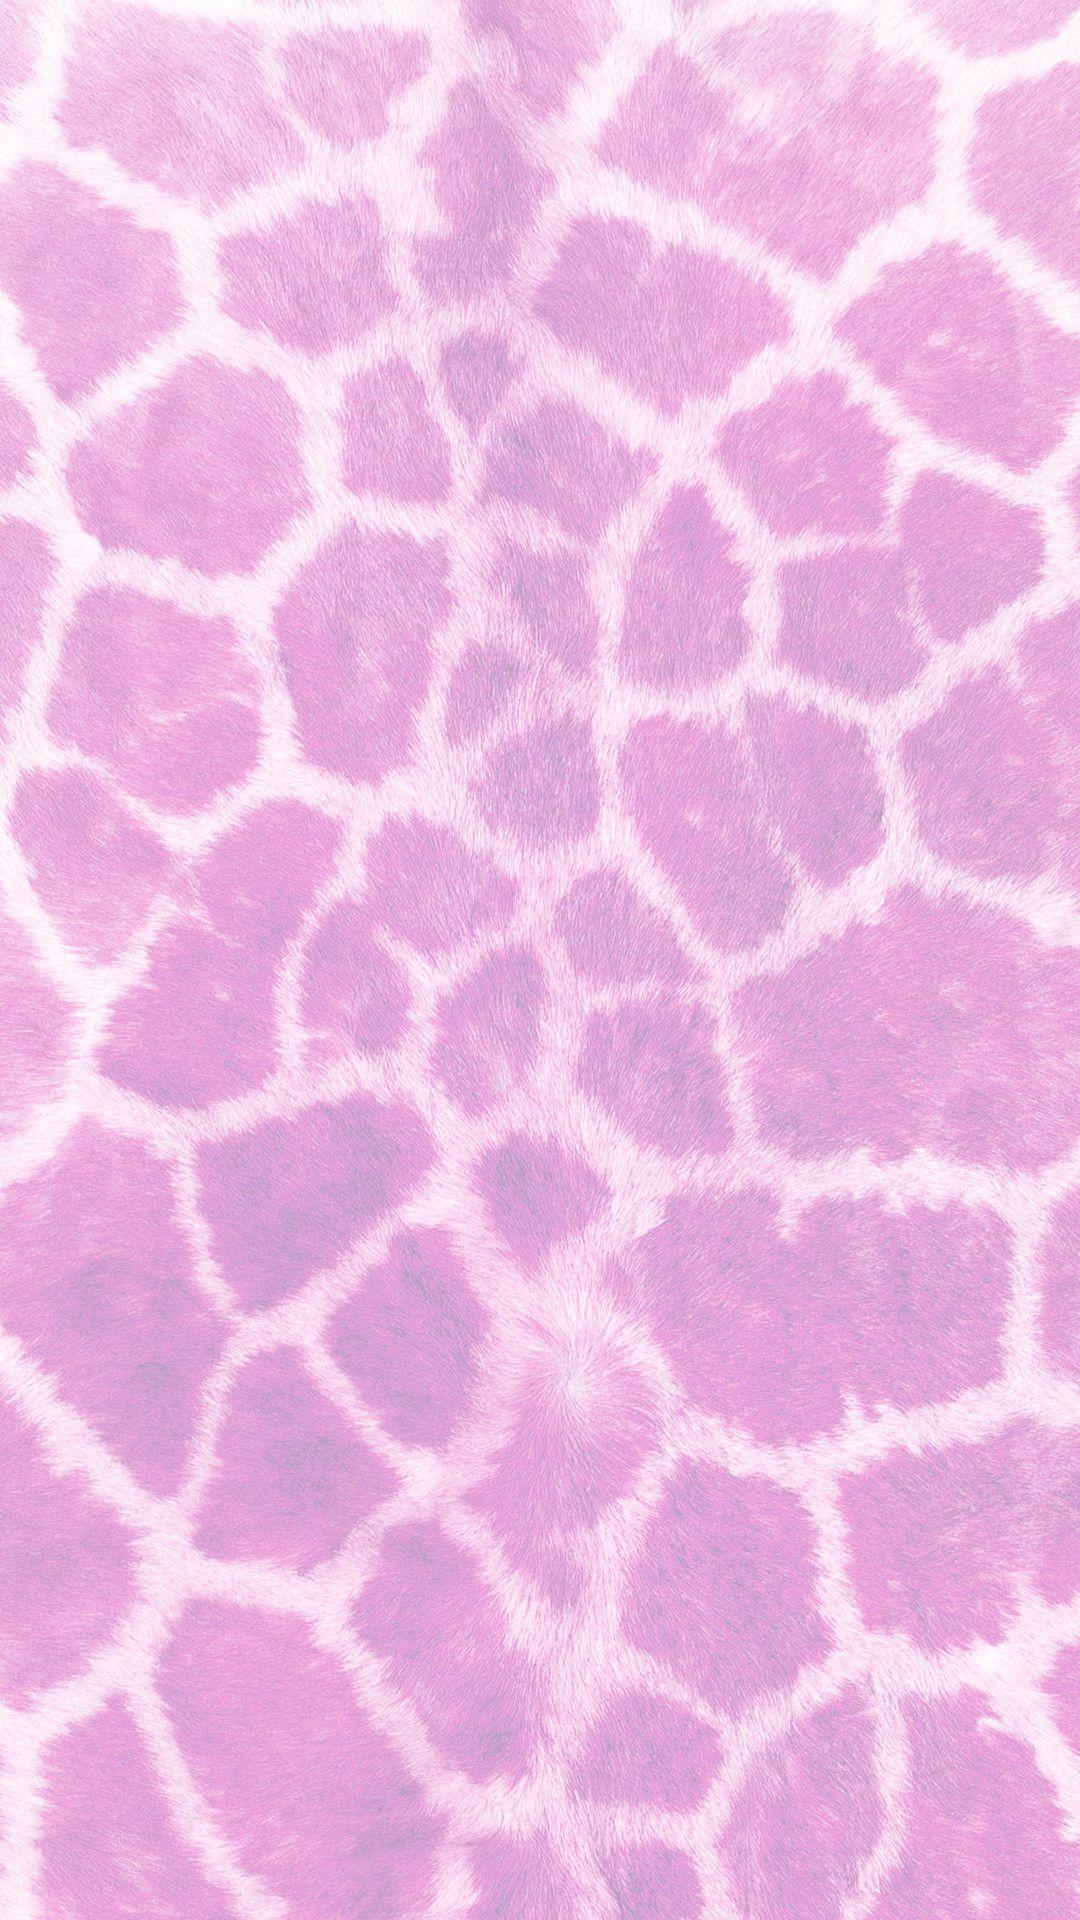 Pink Fur Wallpaper 53 images